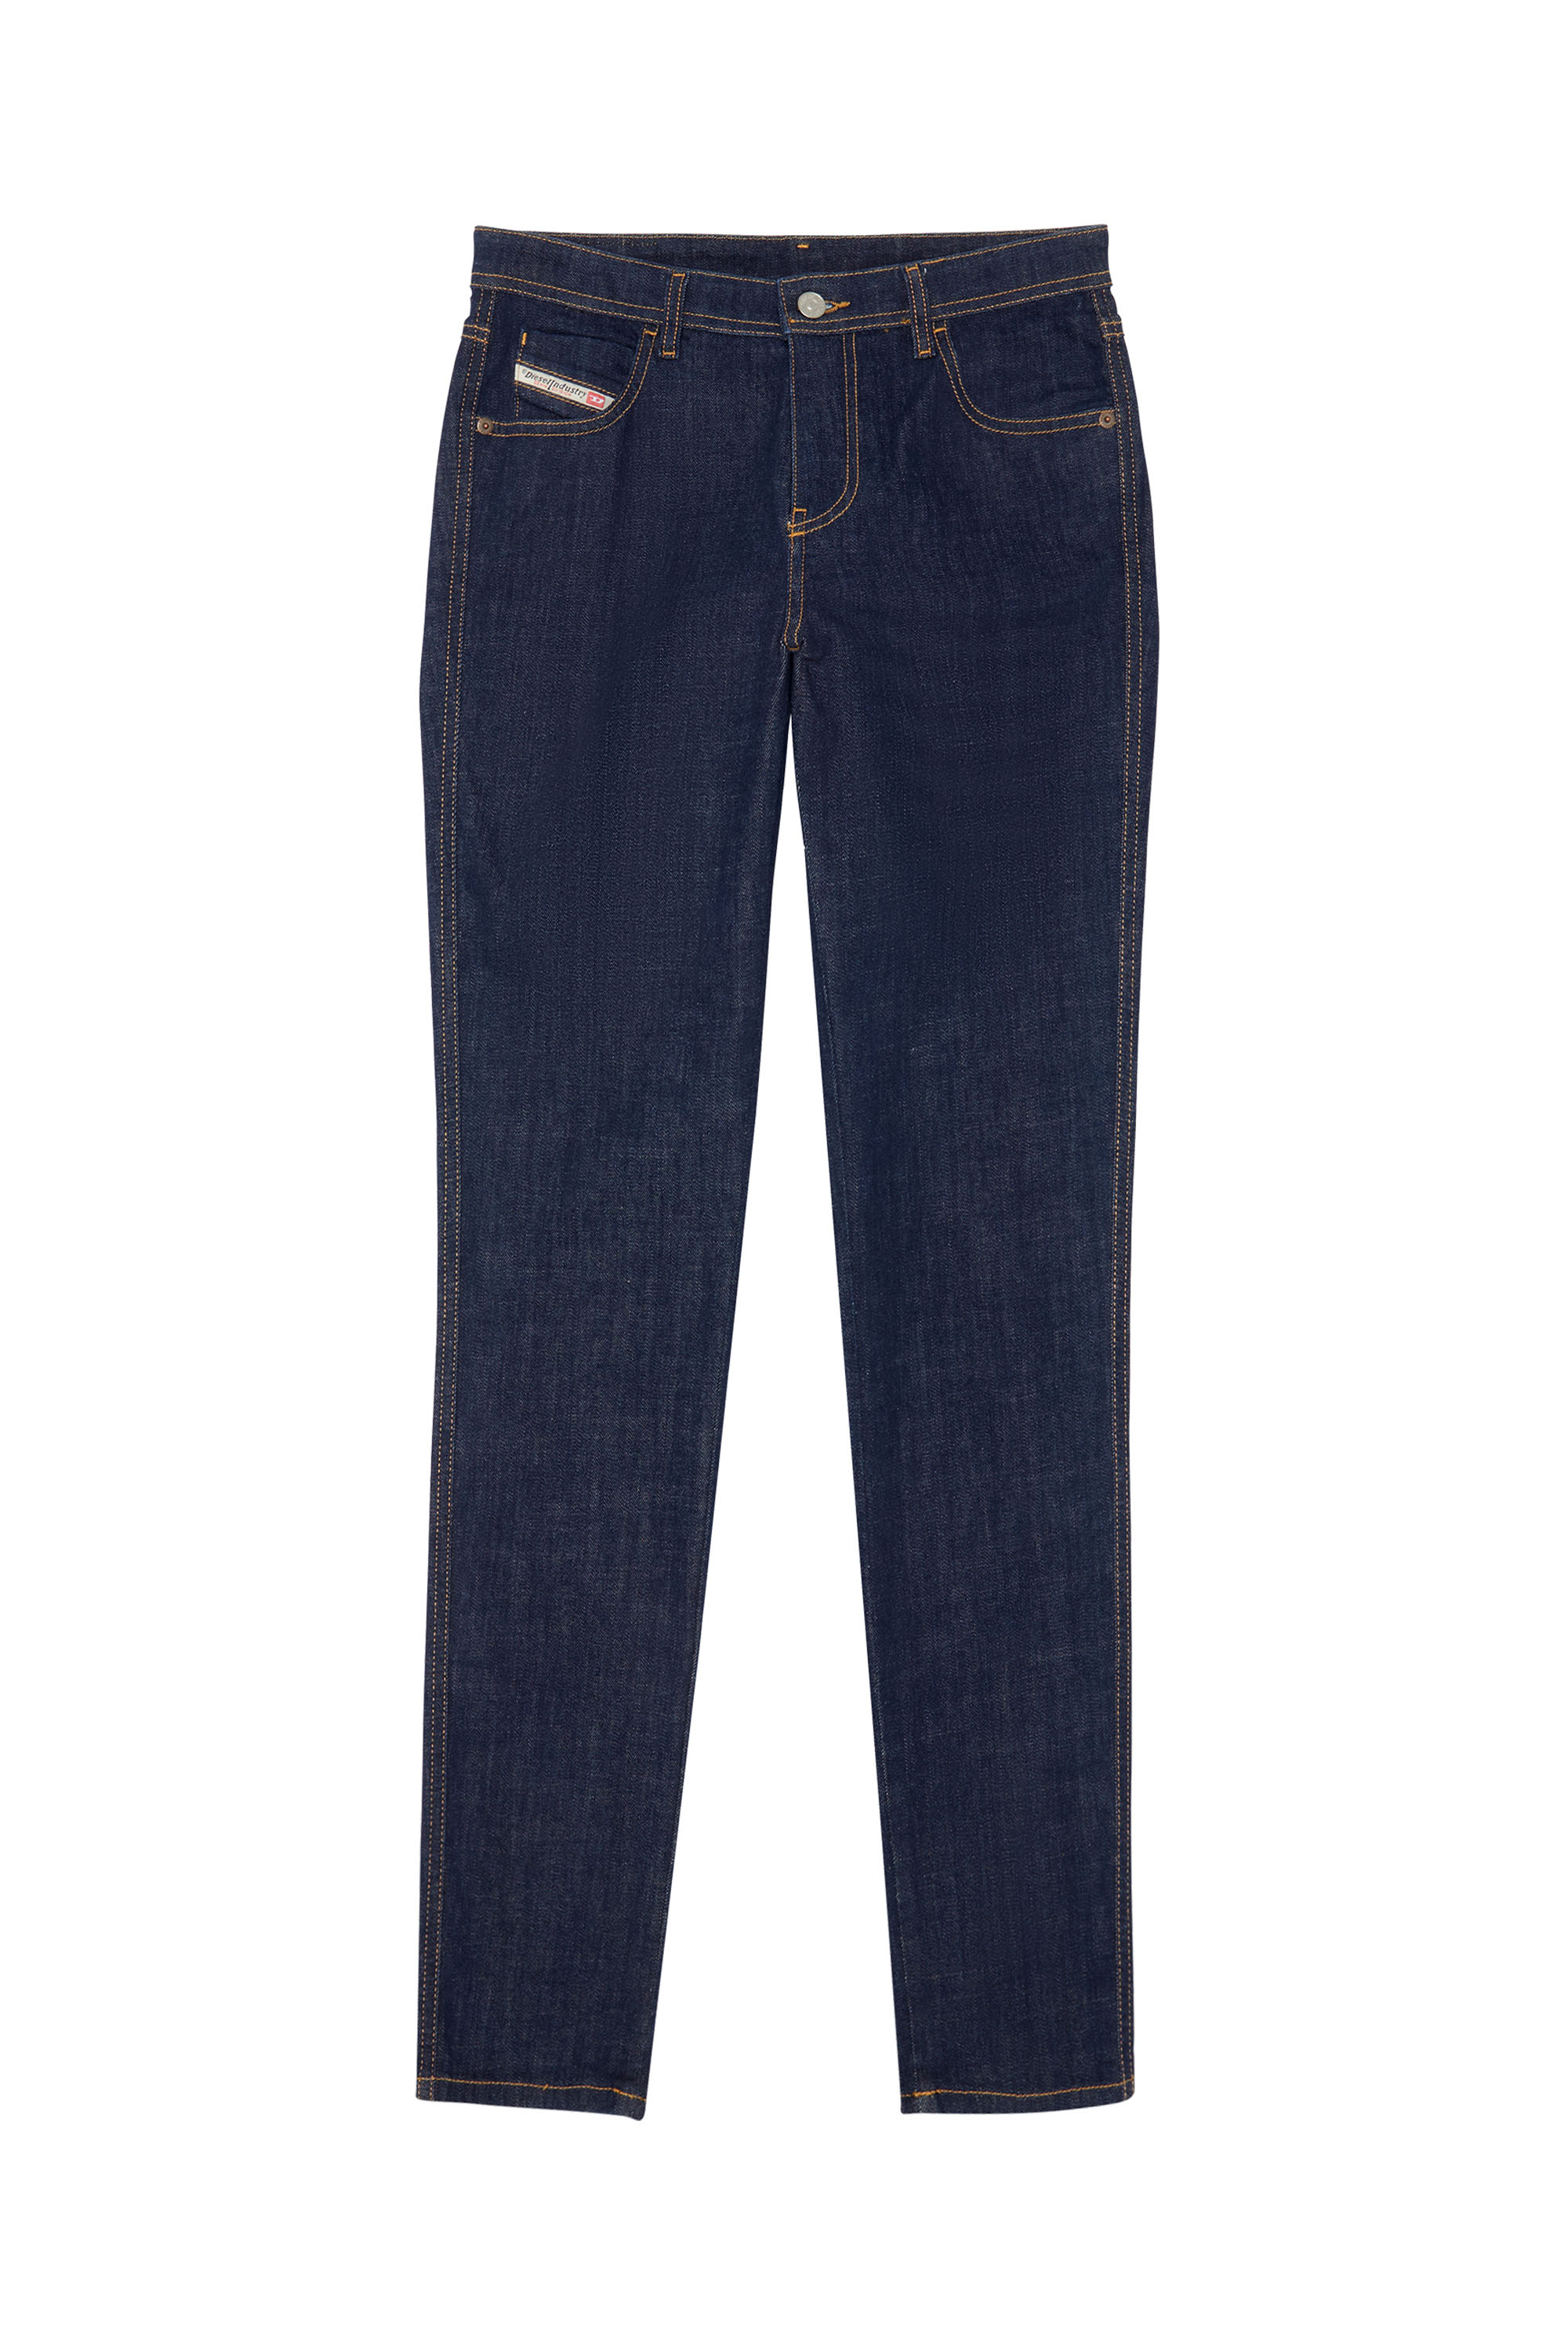 Skinny Jeans 2015 Babhila Z9C17, Bleu Foncé - Jeans